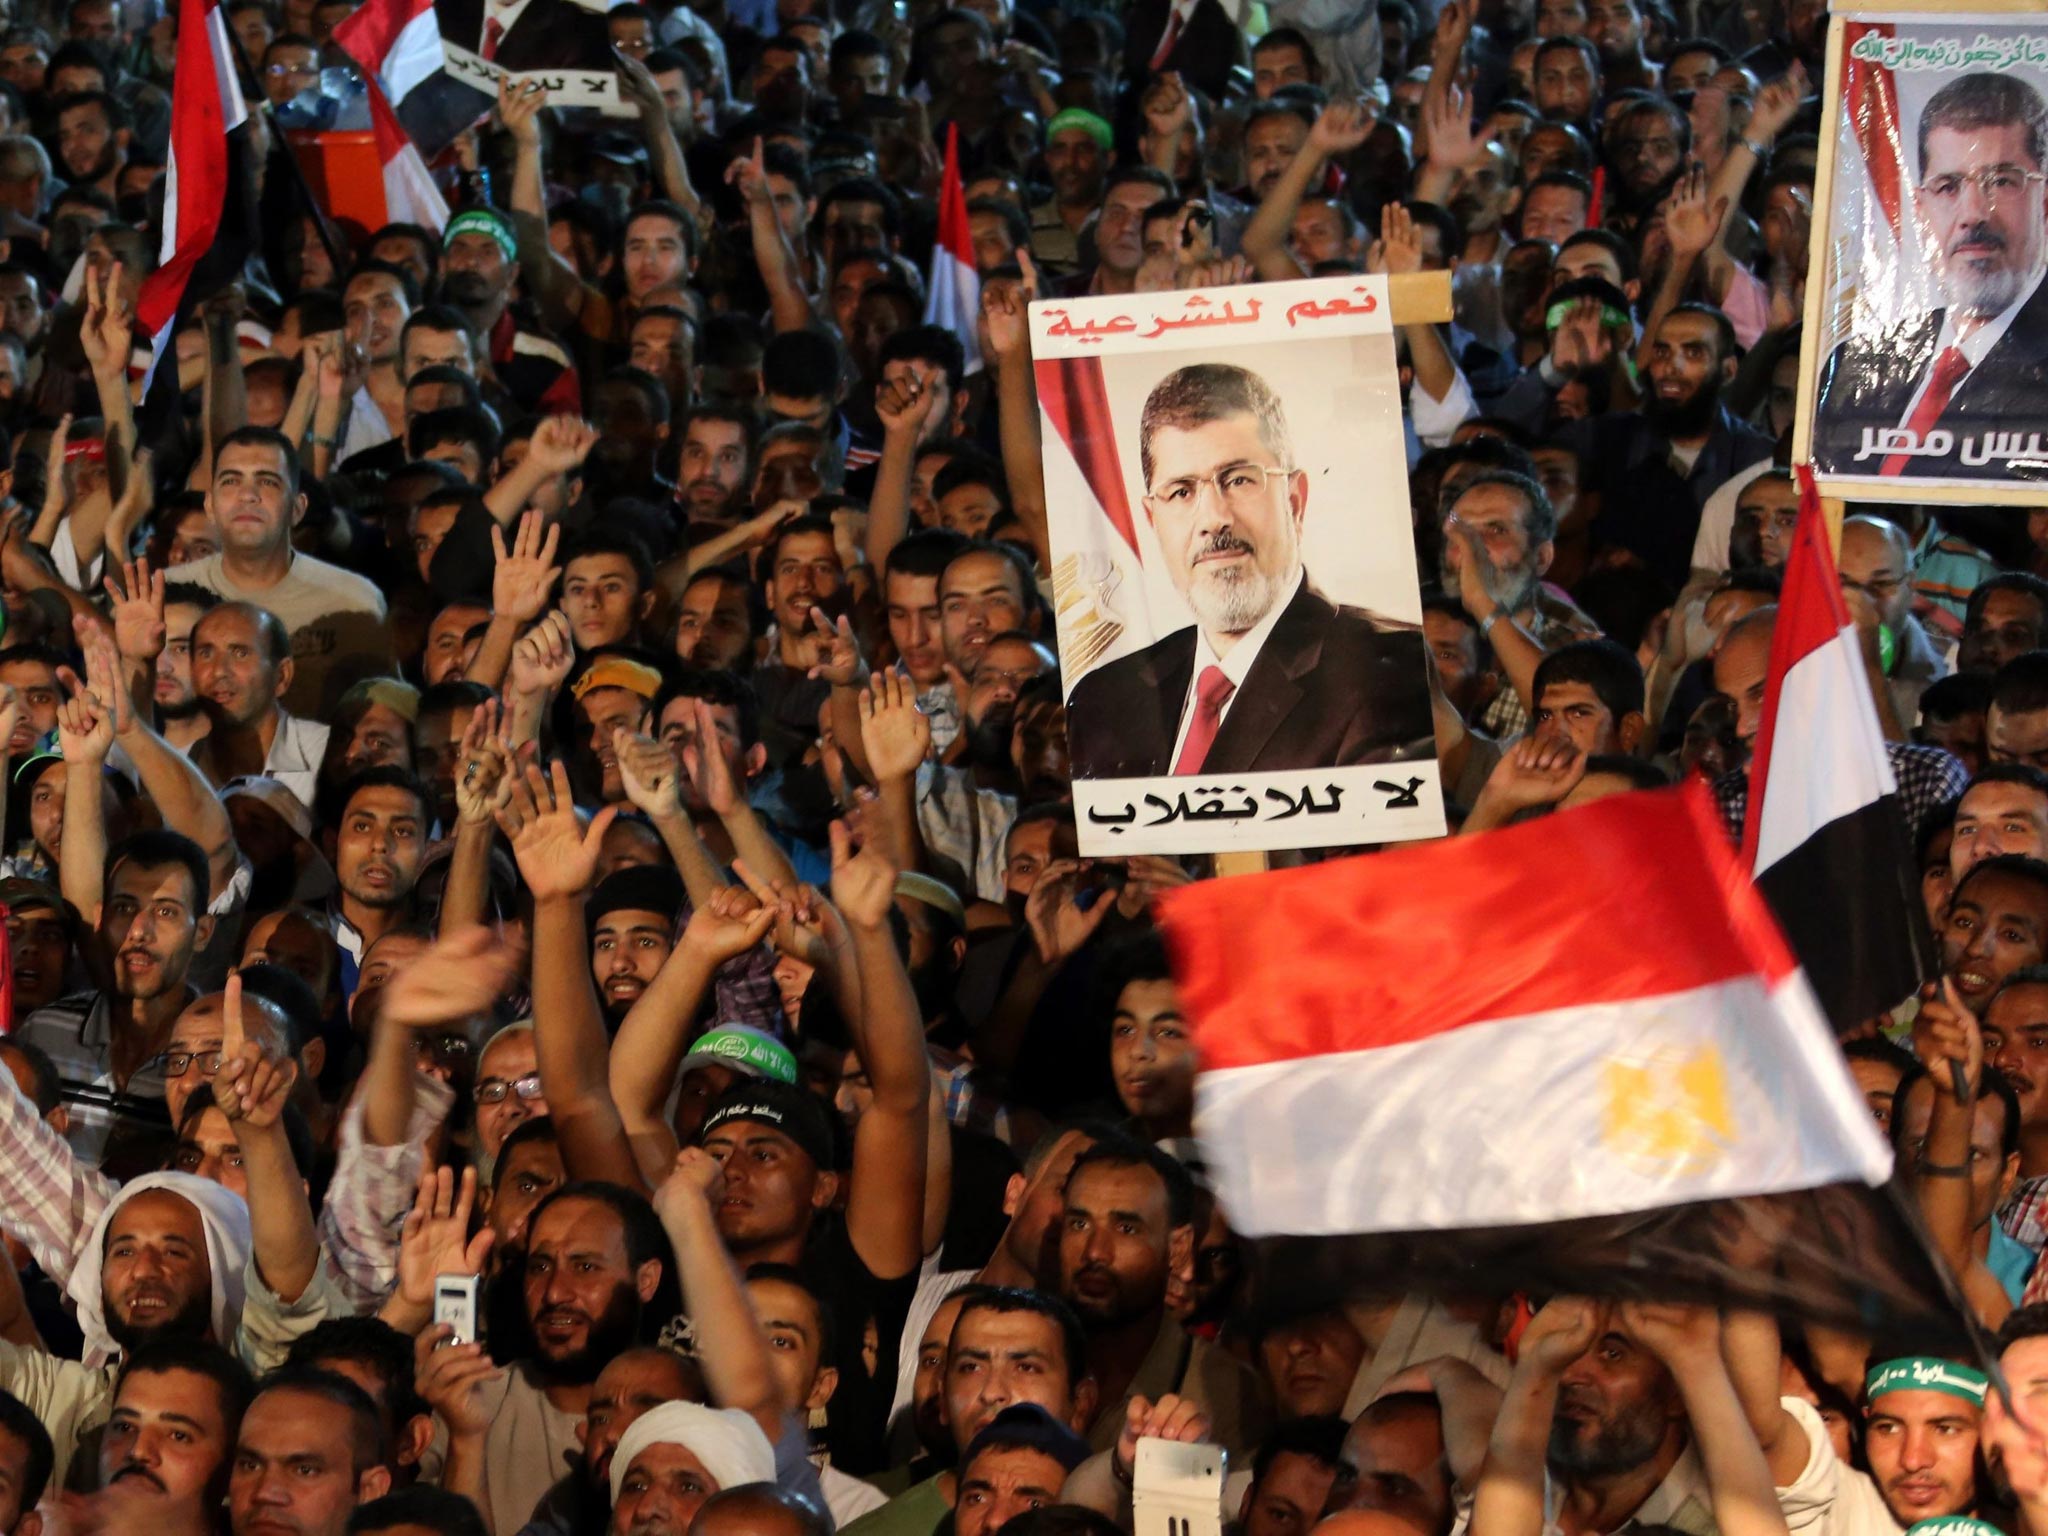 Supporters of ousted president Mohamed Morsi